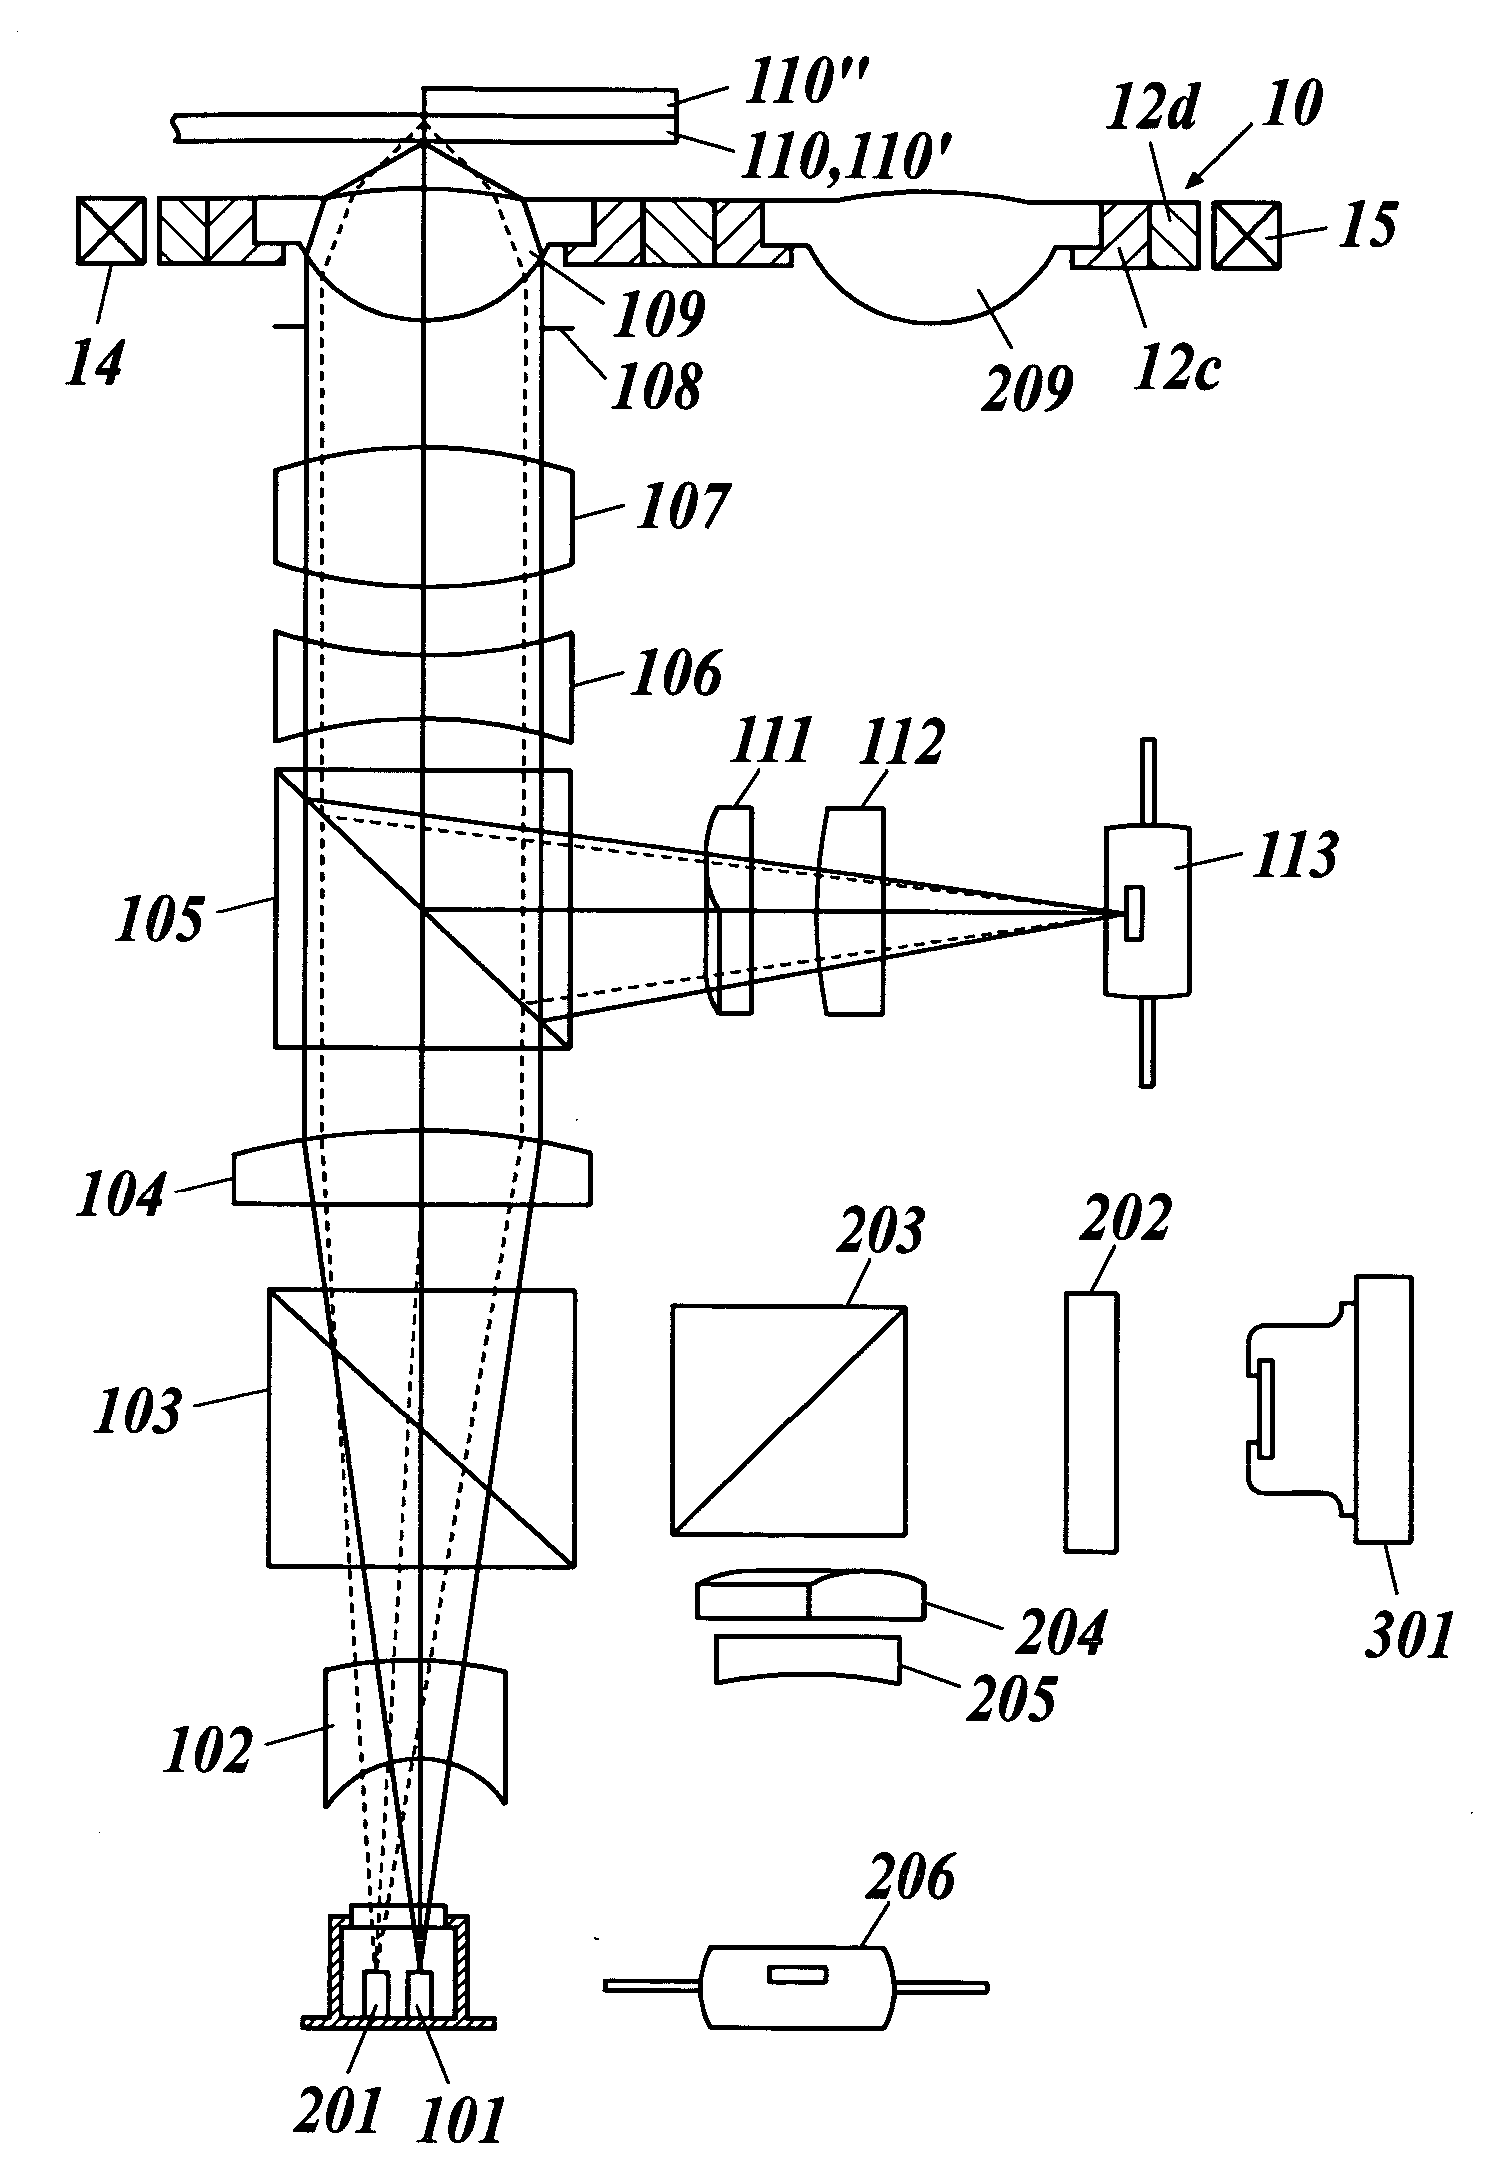 Optical pickup apparatus